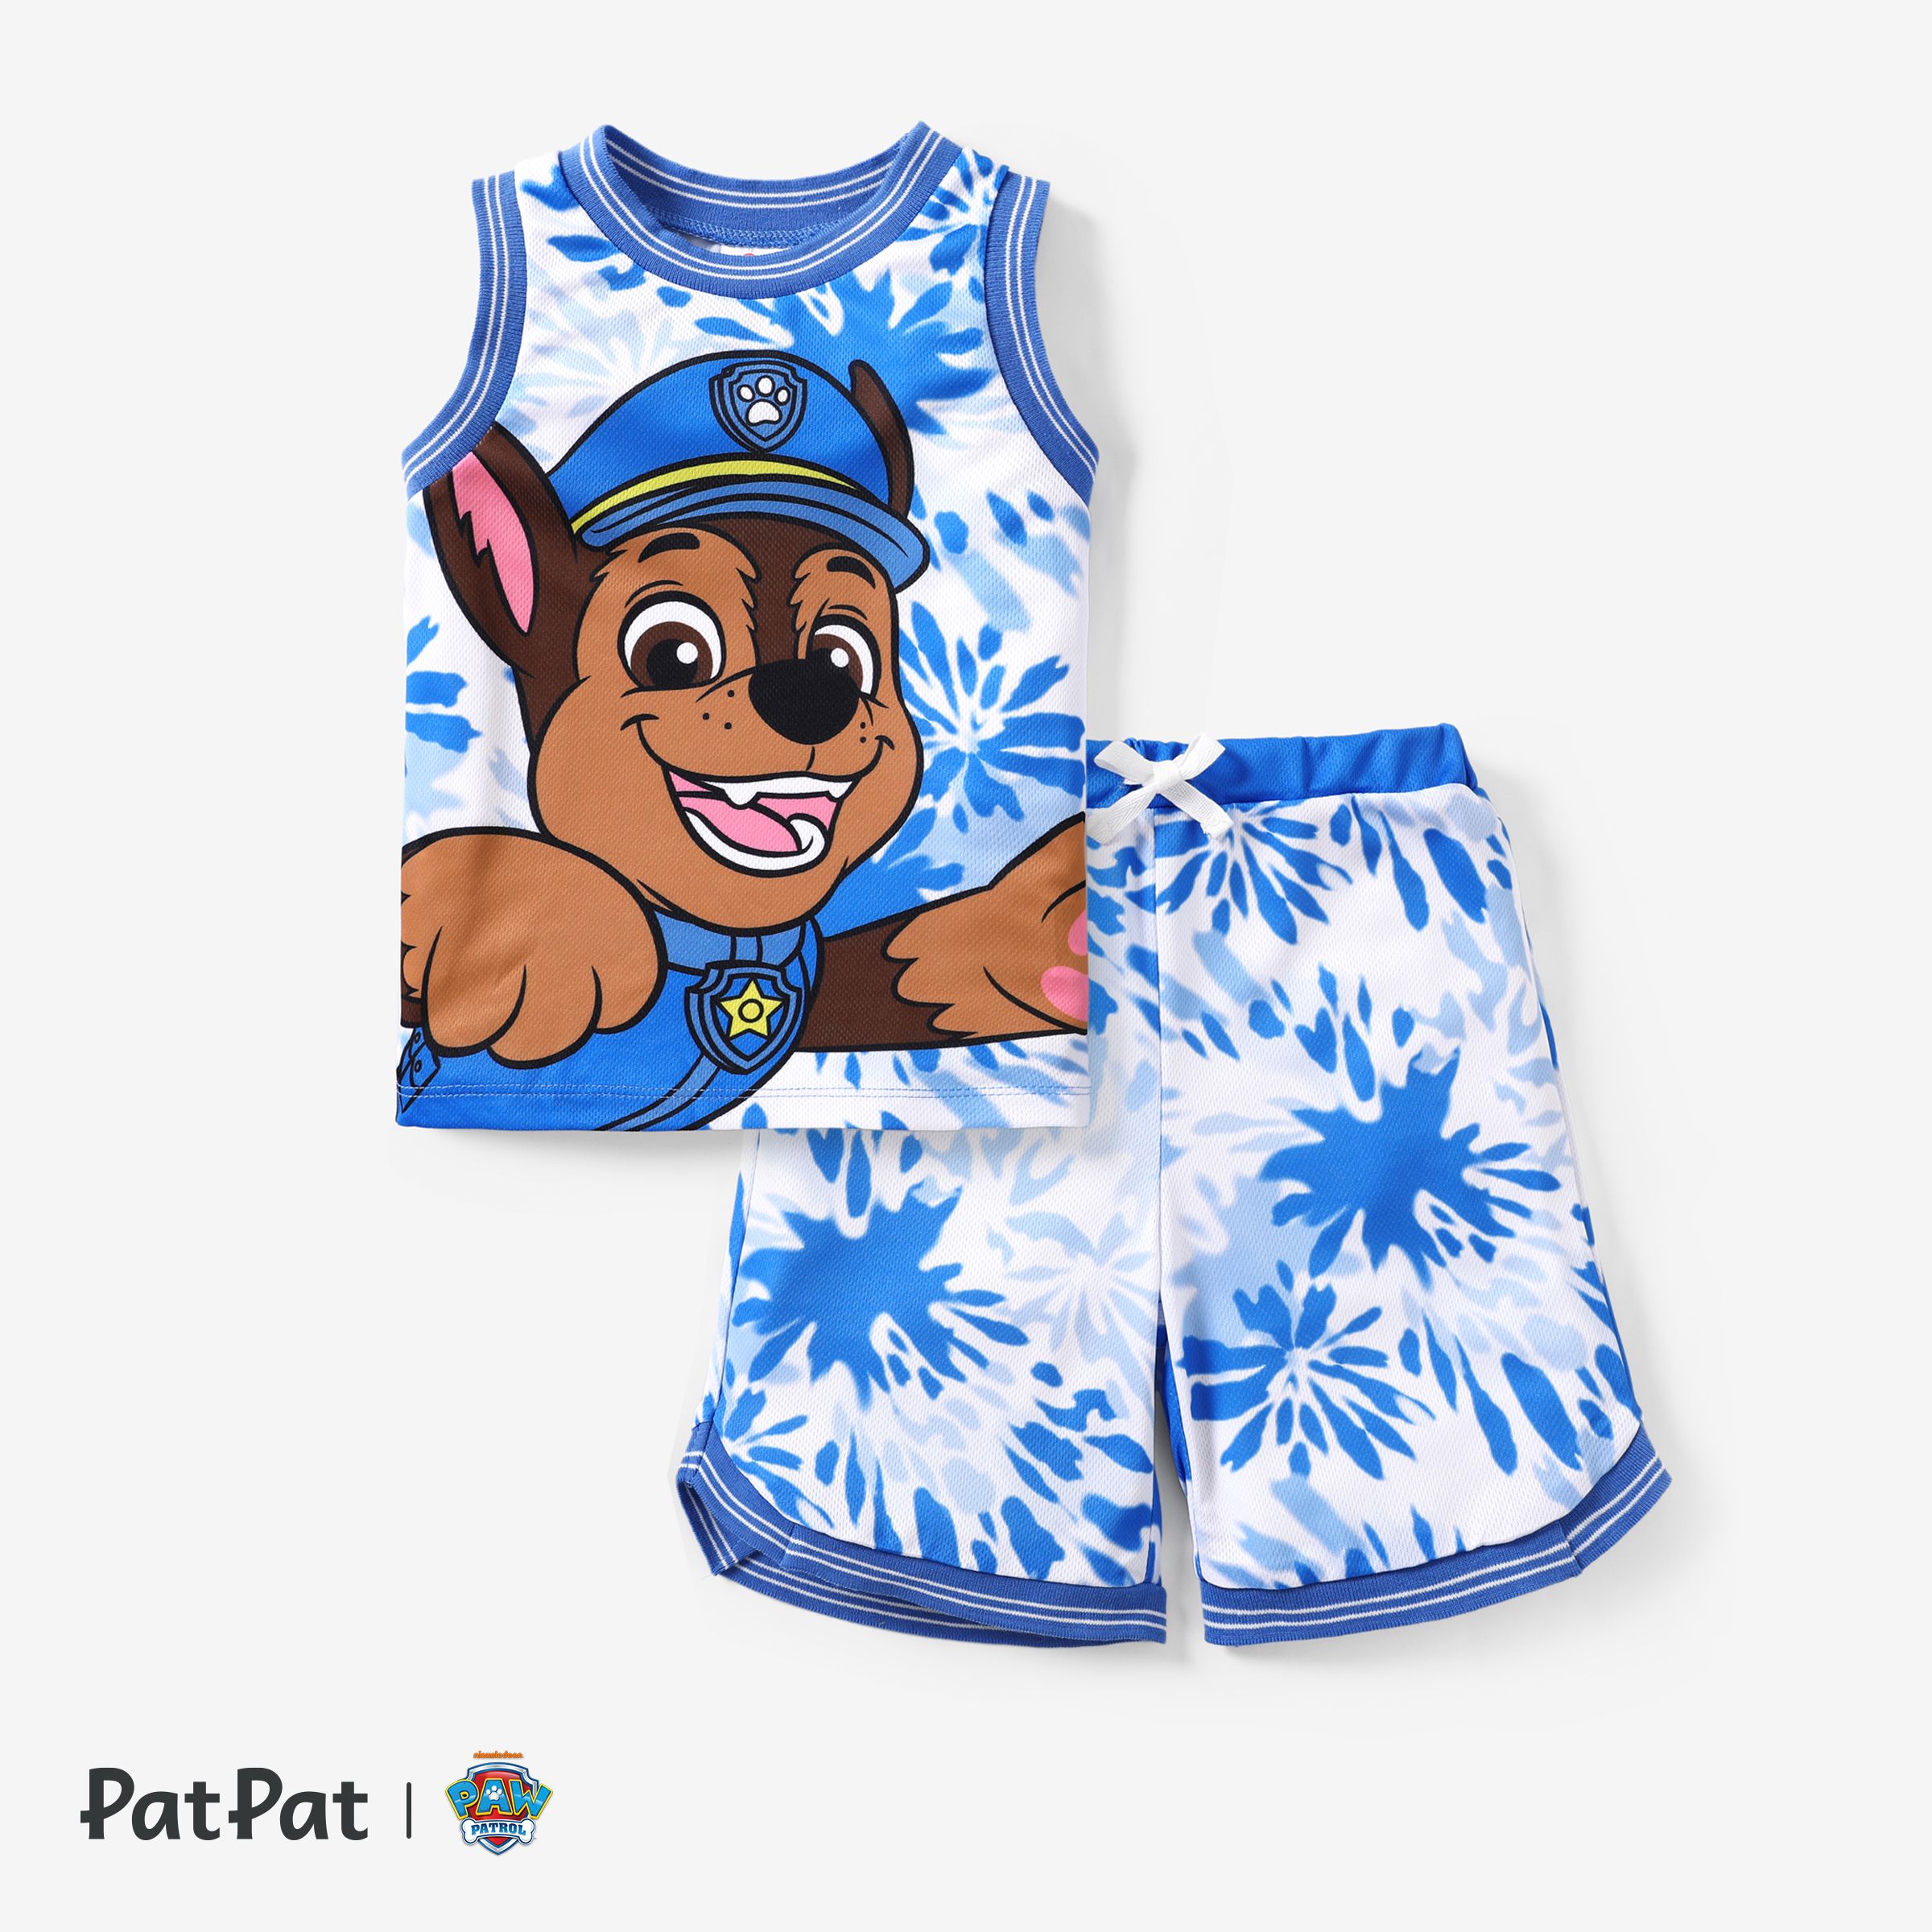 PatPat PAW Patrol Boys/Girls Children's Sports and Leisure Tie-Dye Print Effect Flat Machine Webbing Basketball Jersey sets  - Blue